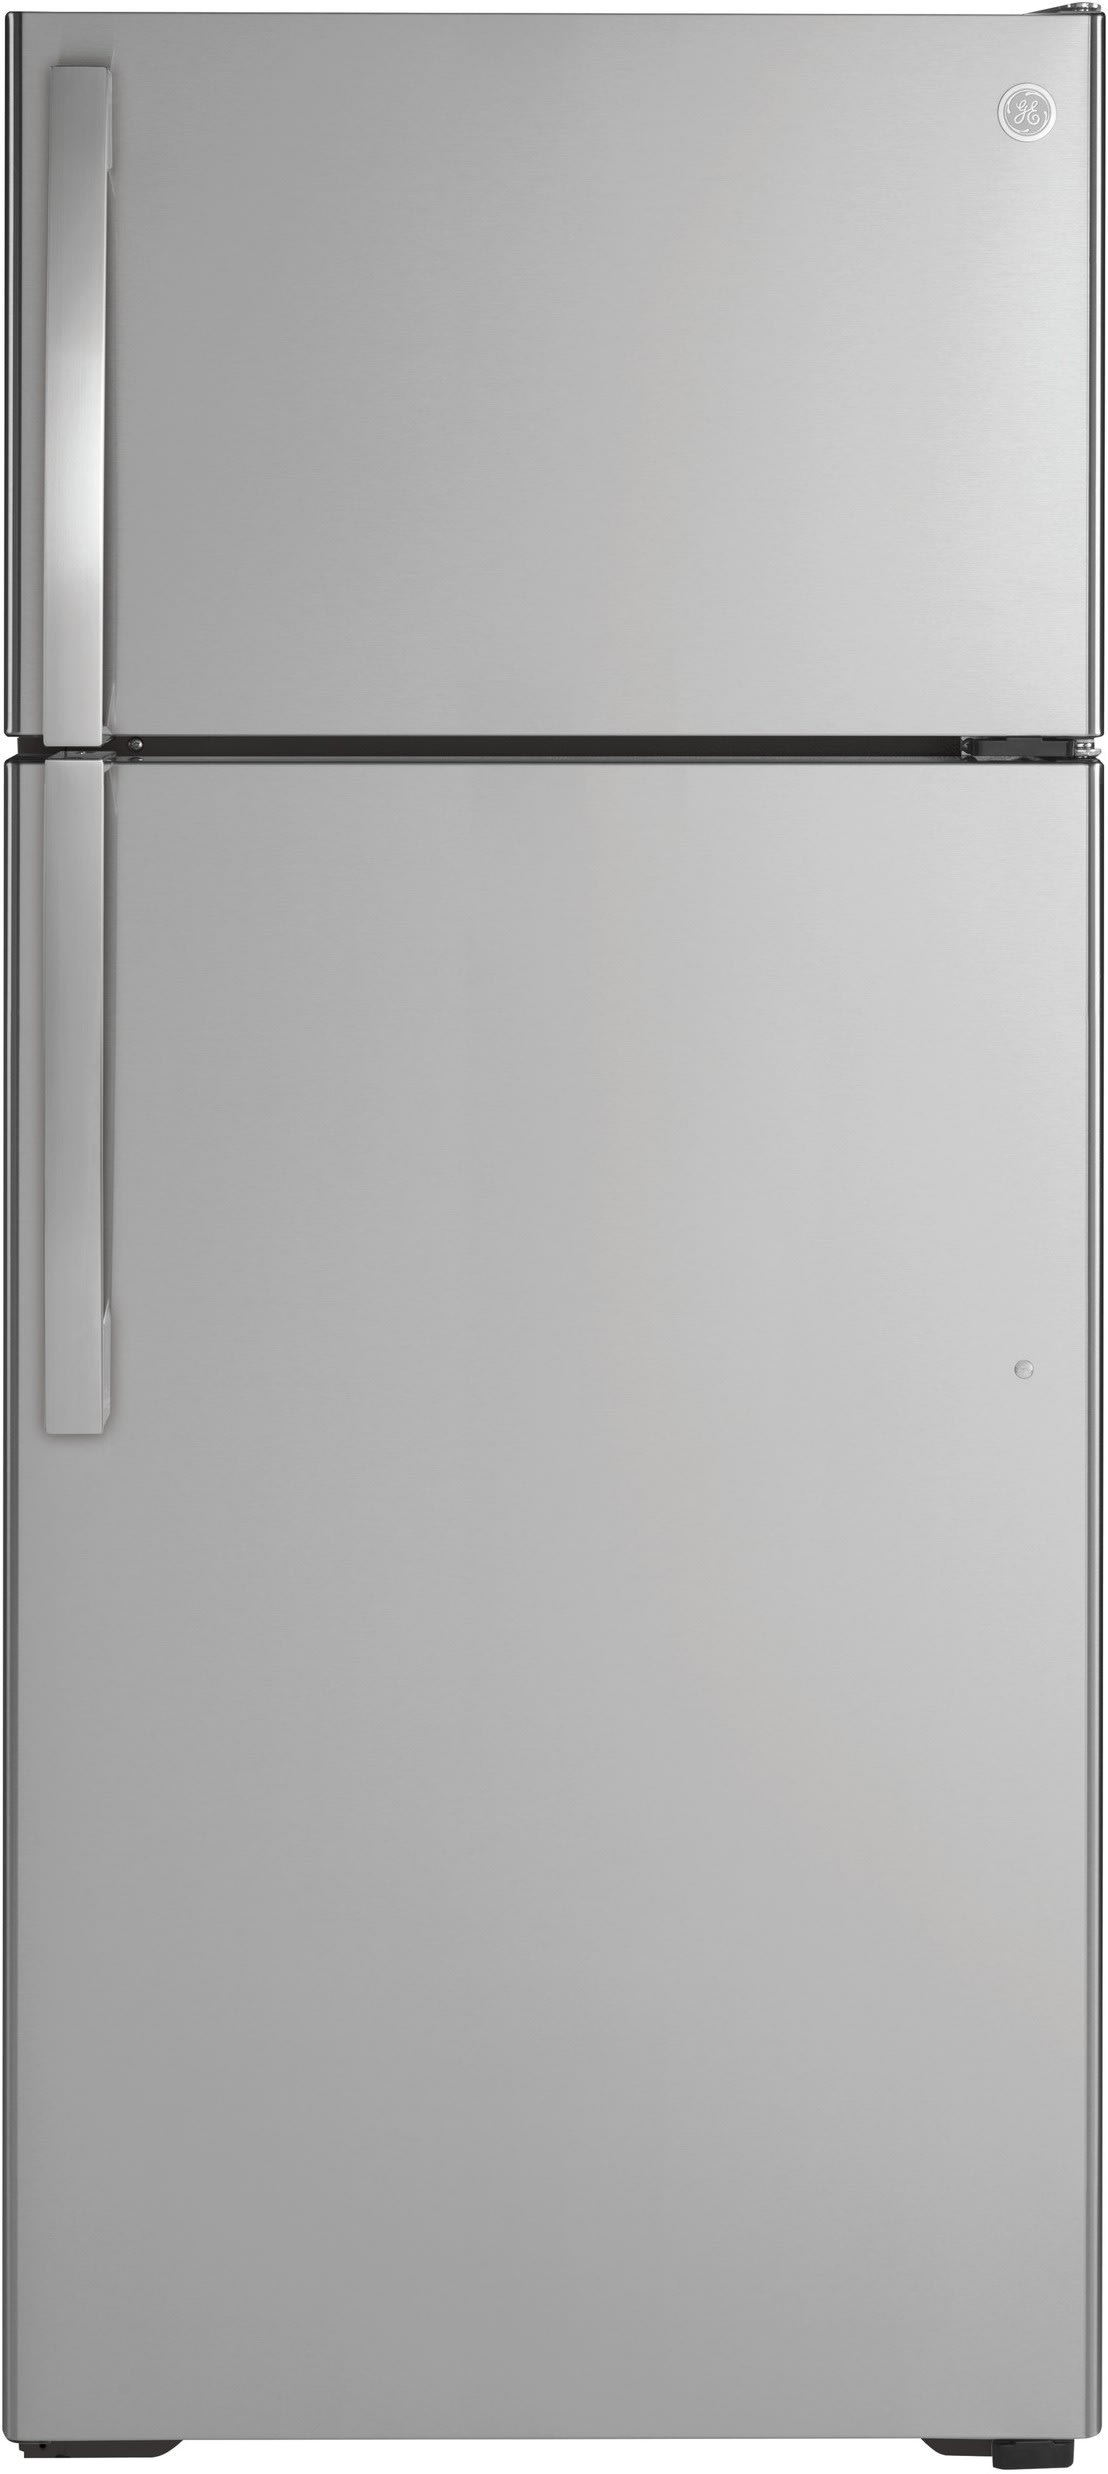 28 Inch Top Freezer Refrigerator